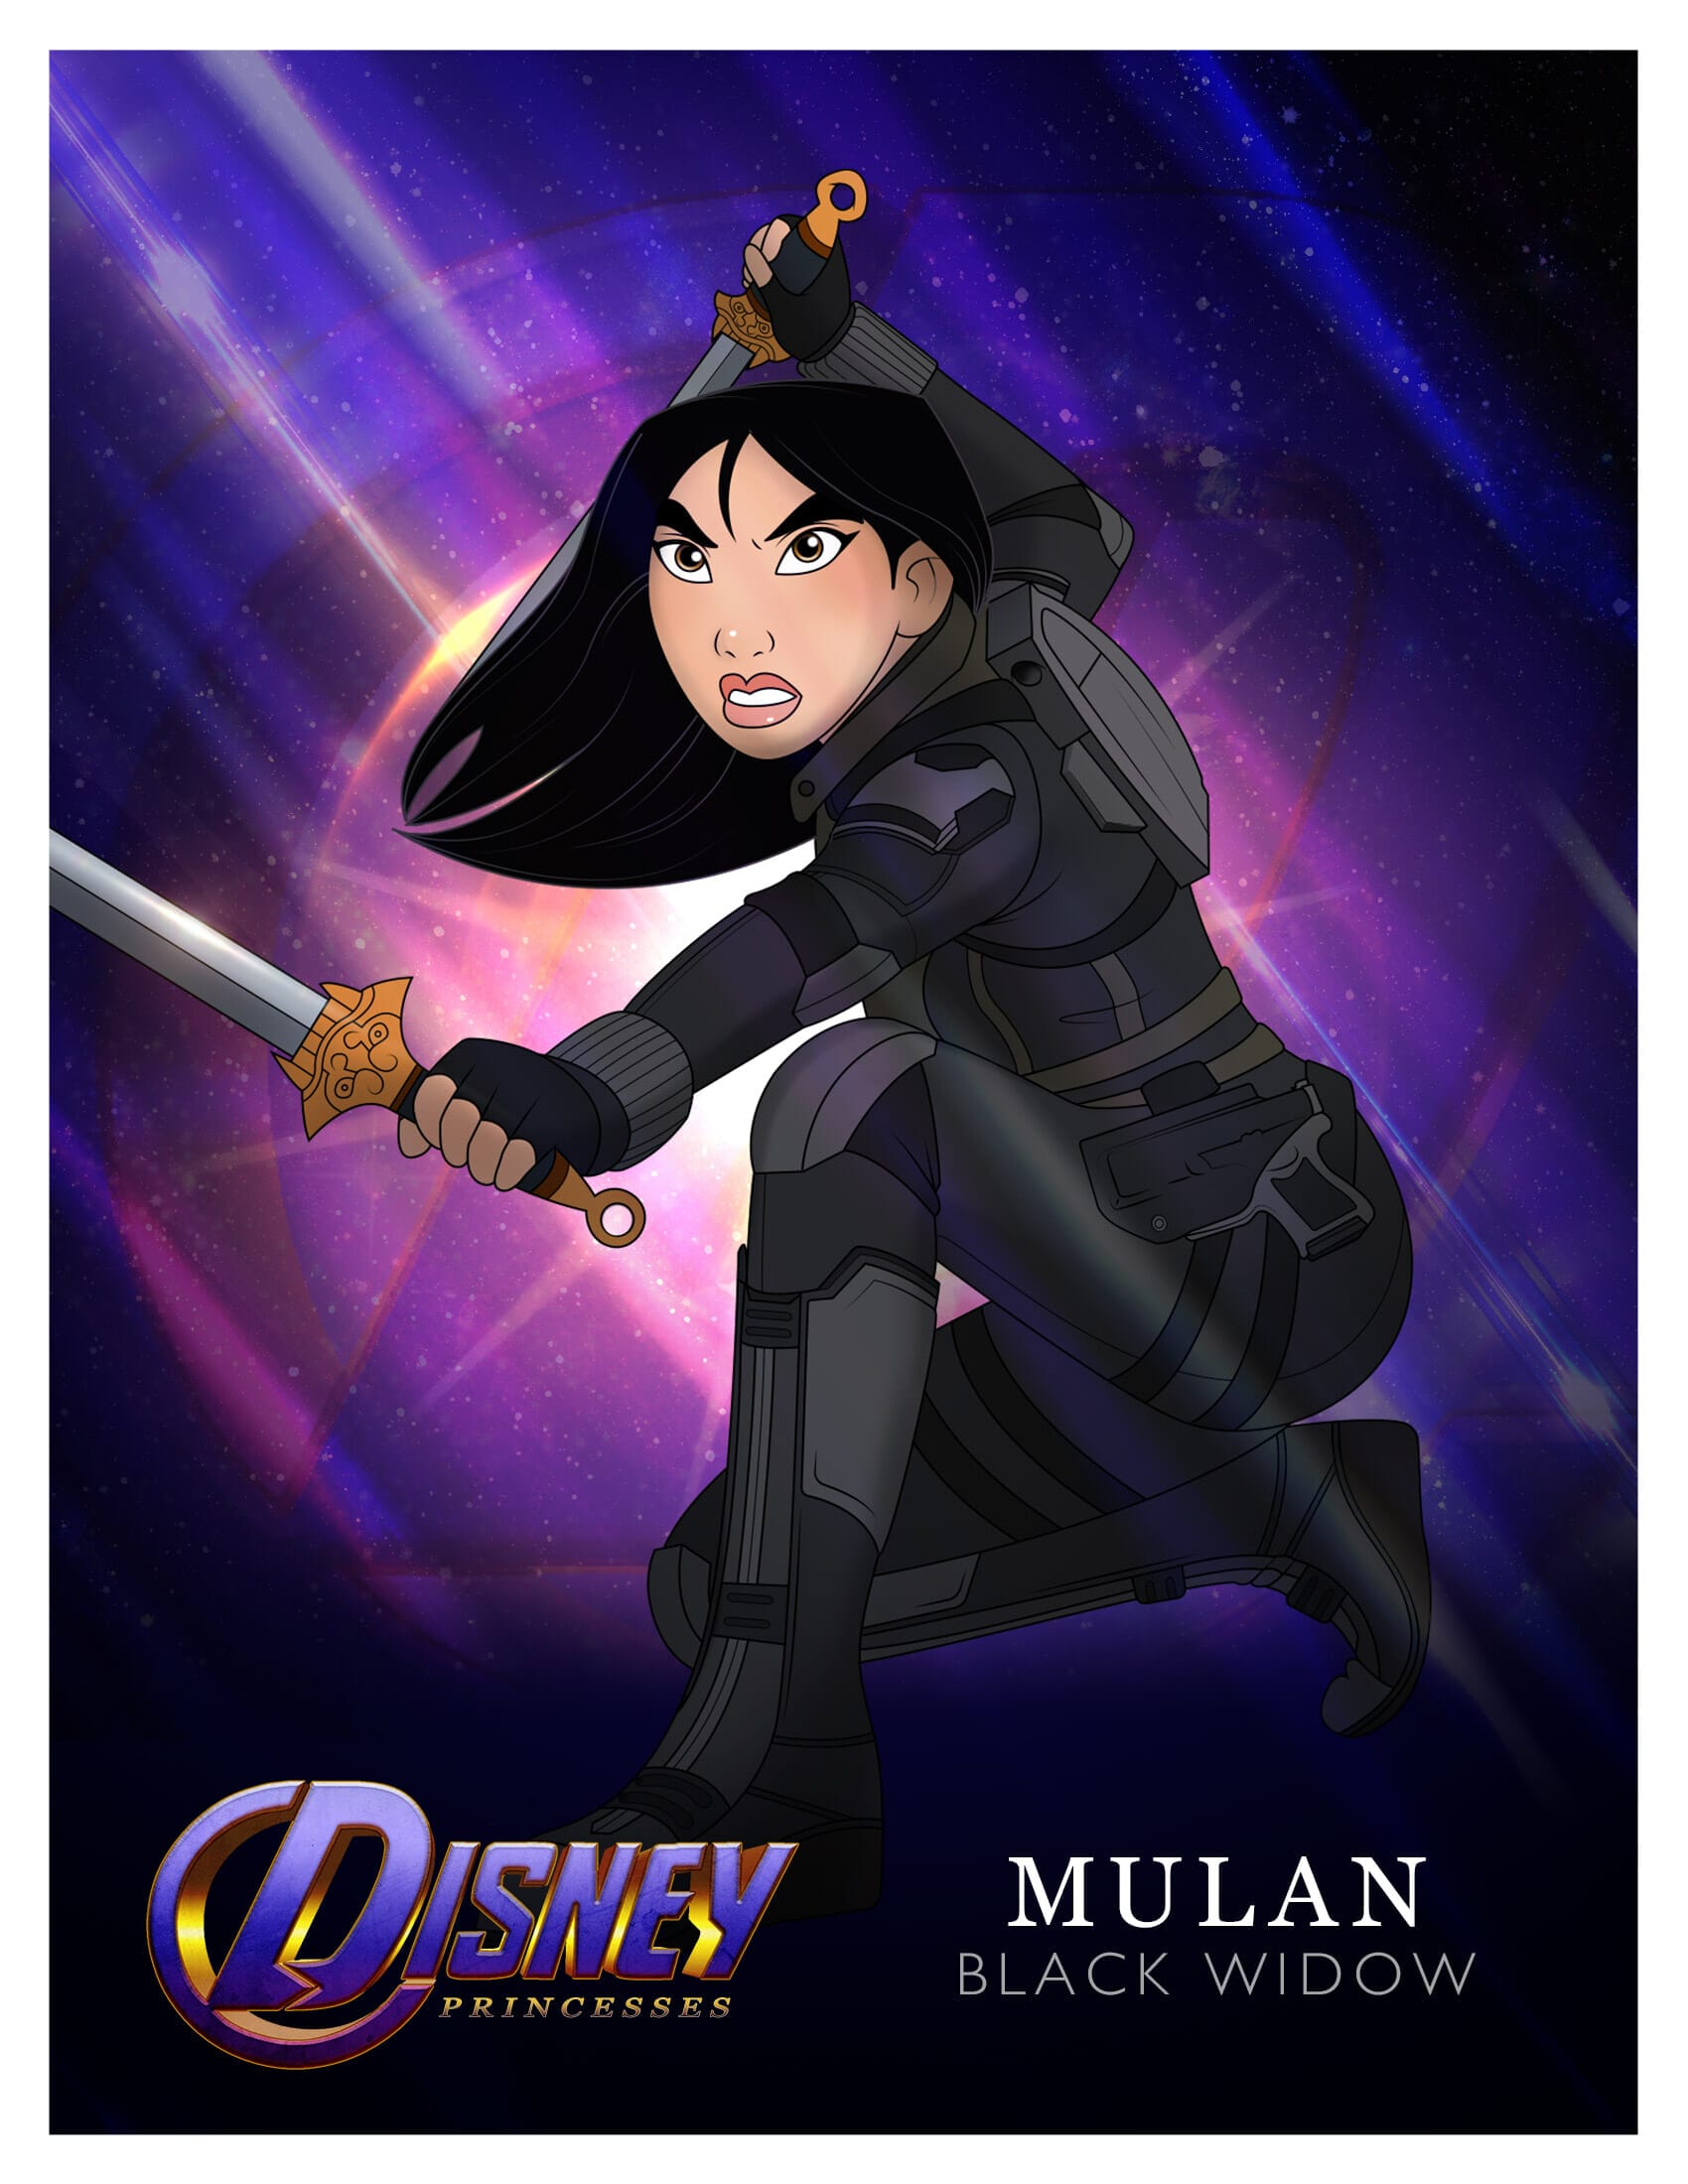 Princess Mulan as Black Widow